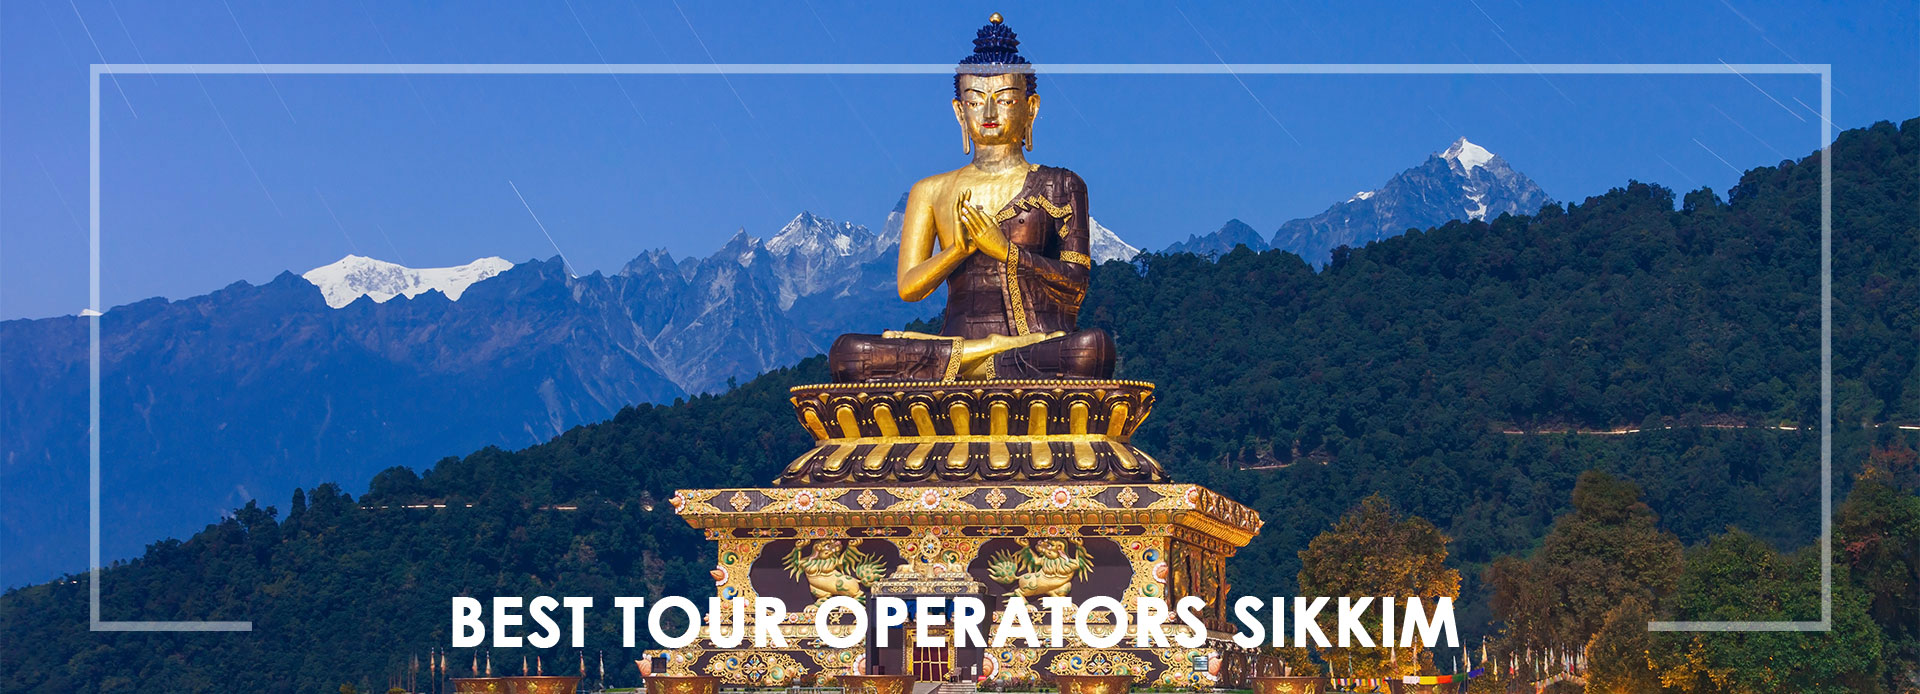  Best Tour Operators in Sikkim - Dream Destination